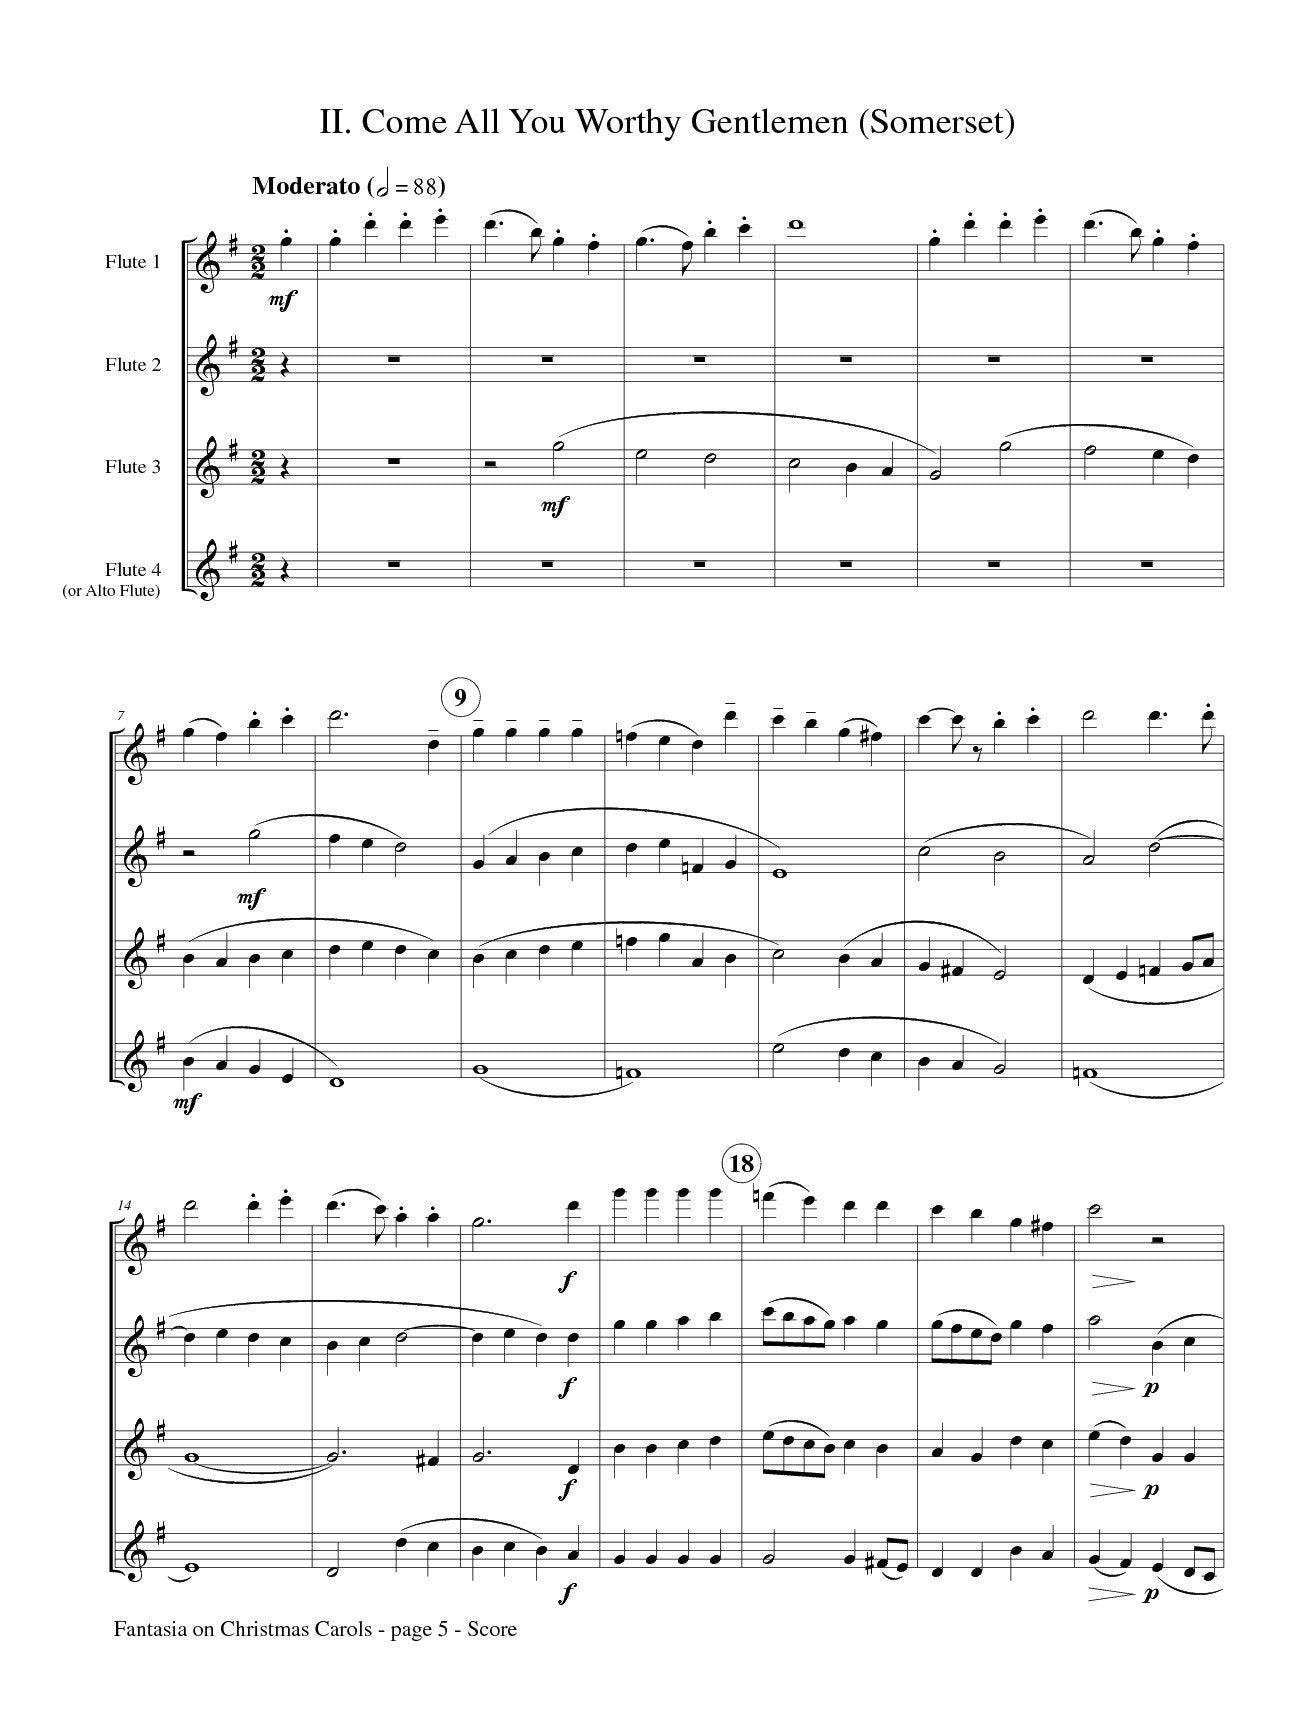 Williams, Ralph Vaughan - Fantasia on Christmas Carols for Flute Quartet